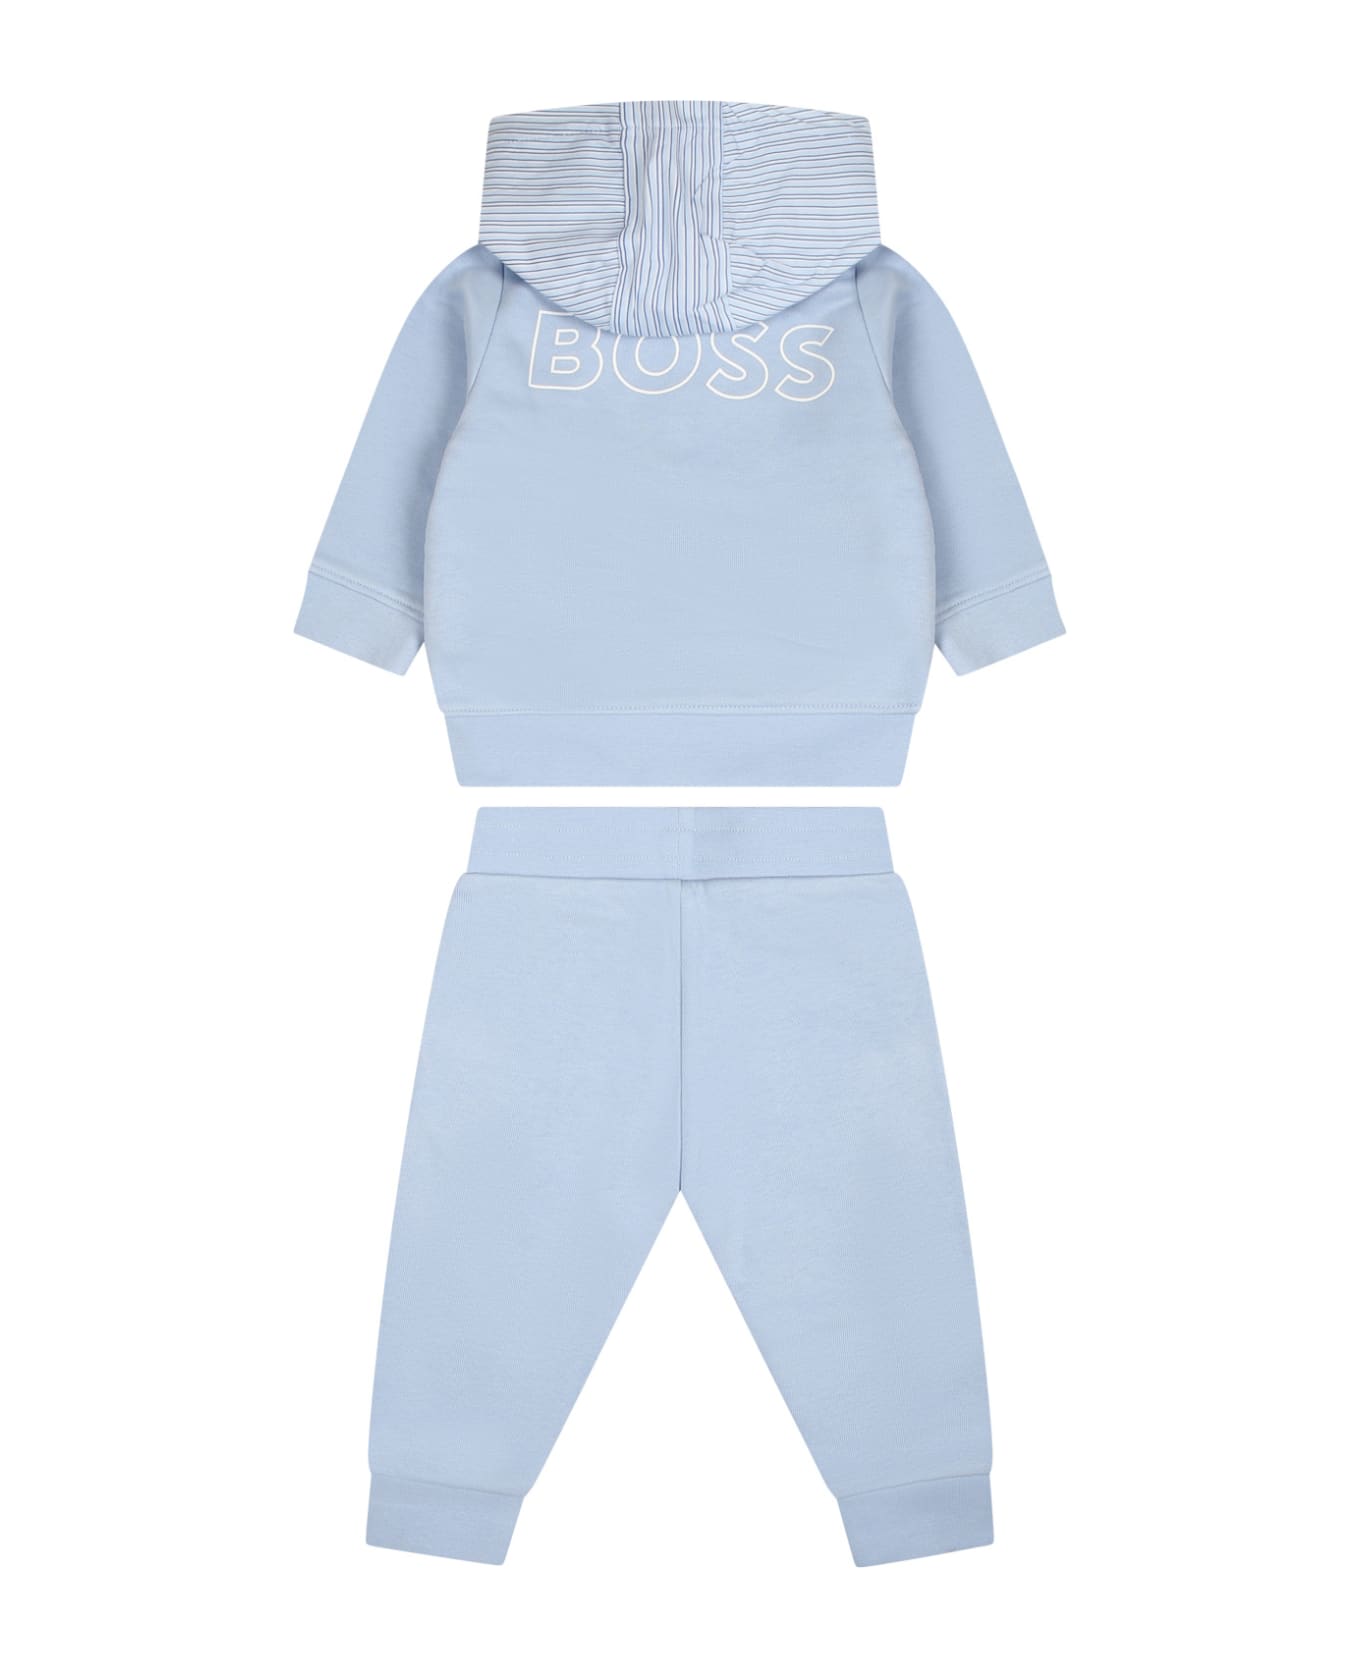 Hugo Boss Light Blue Suit For Baby Boy With Logo - Light Blue ボトムス